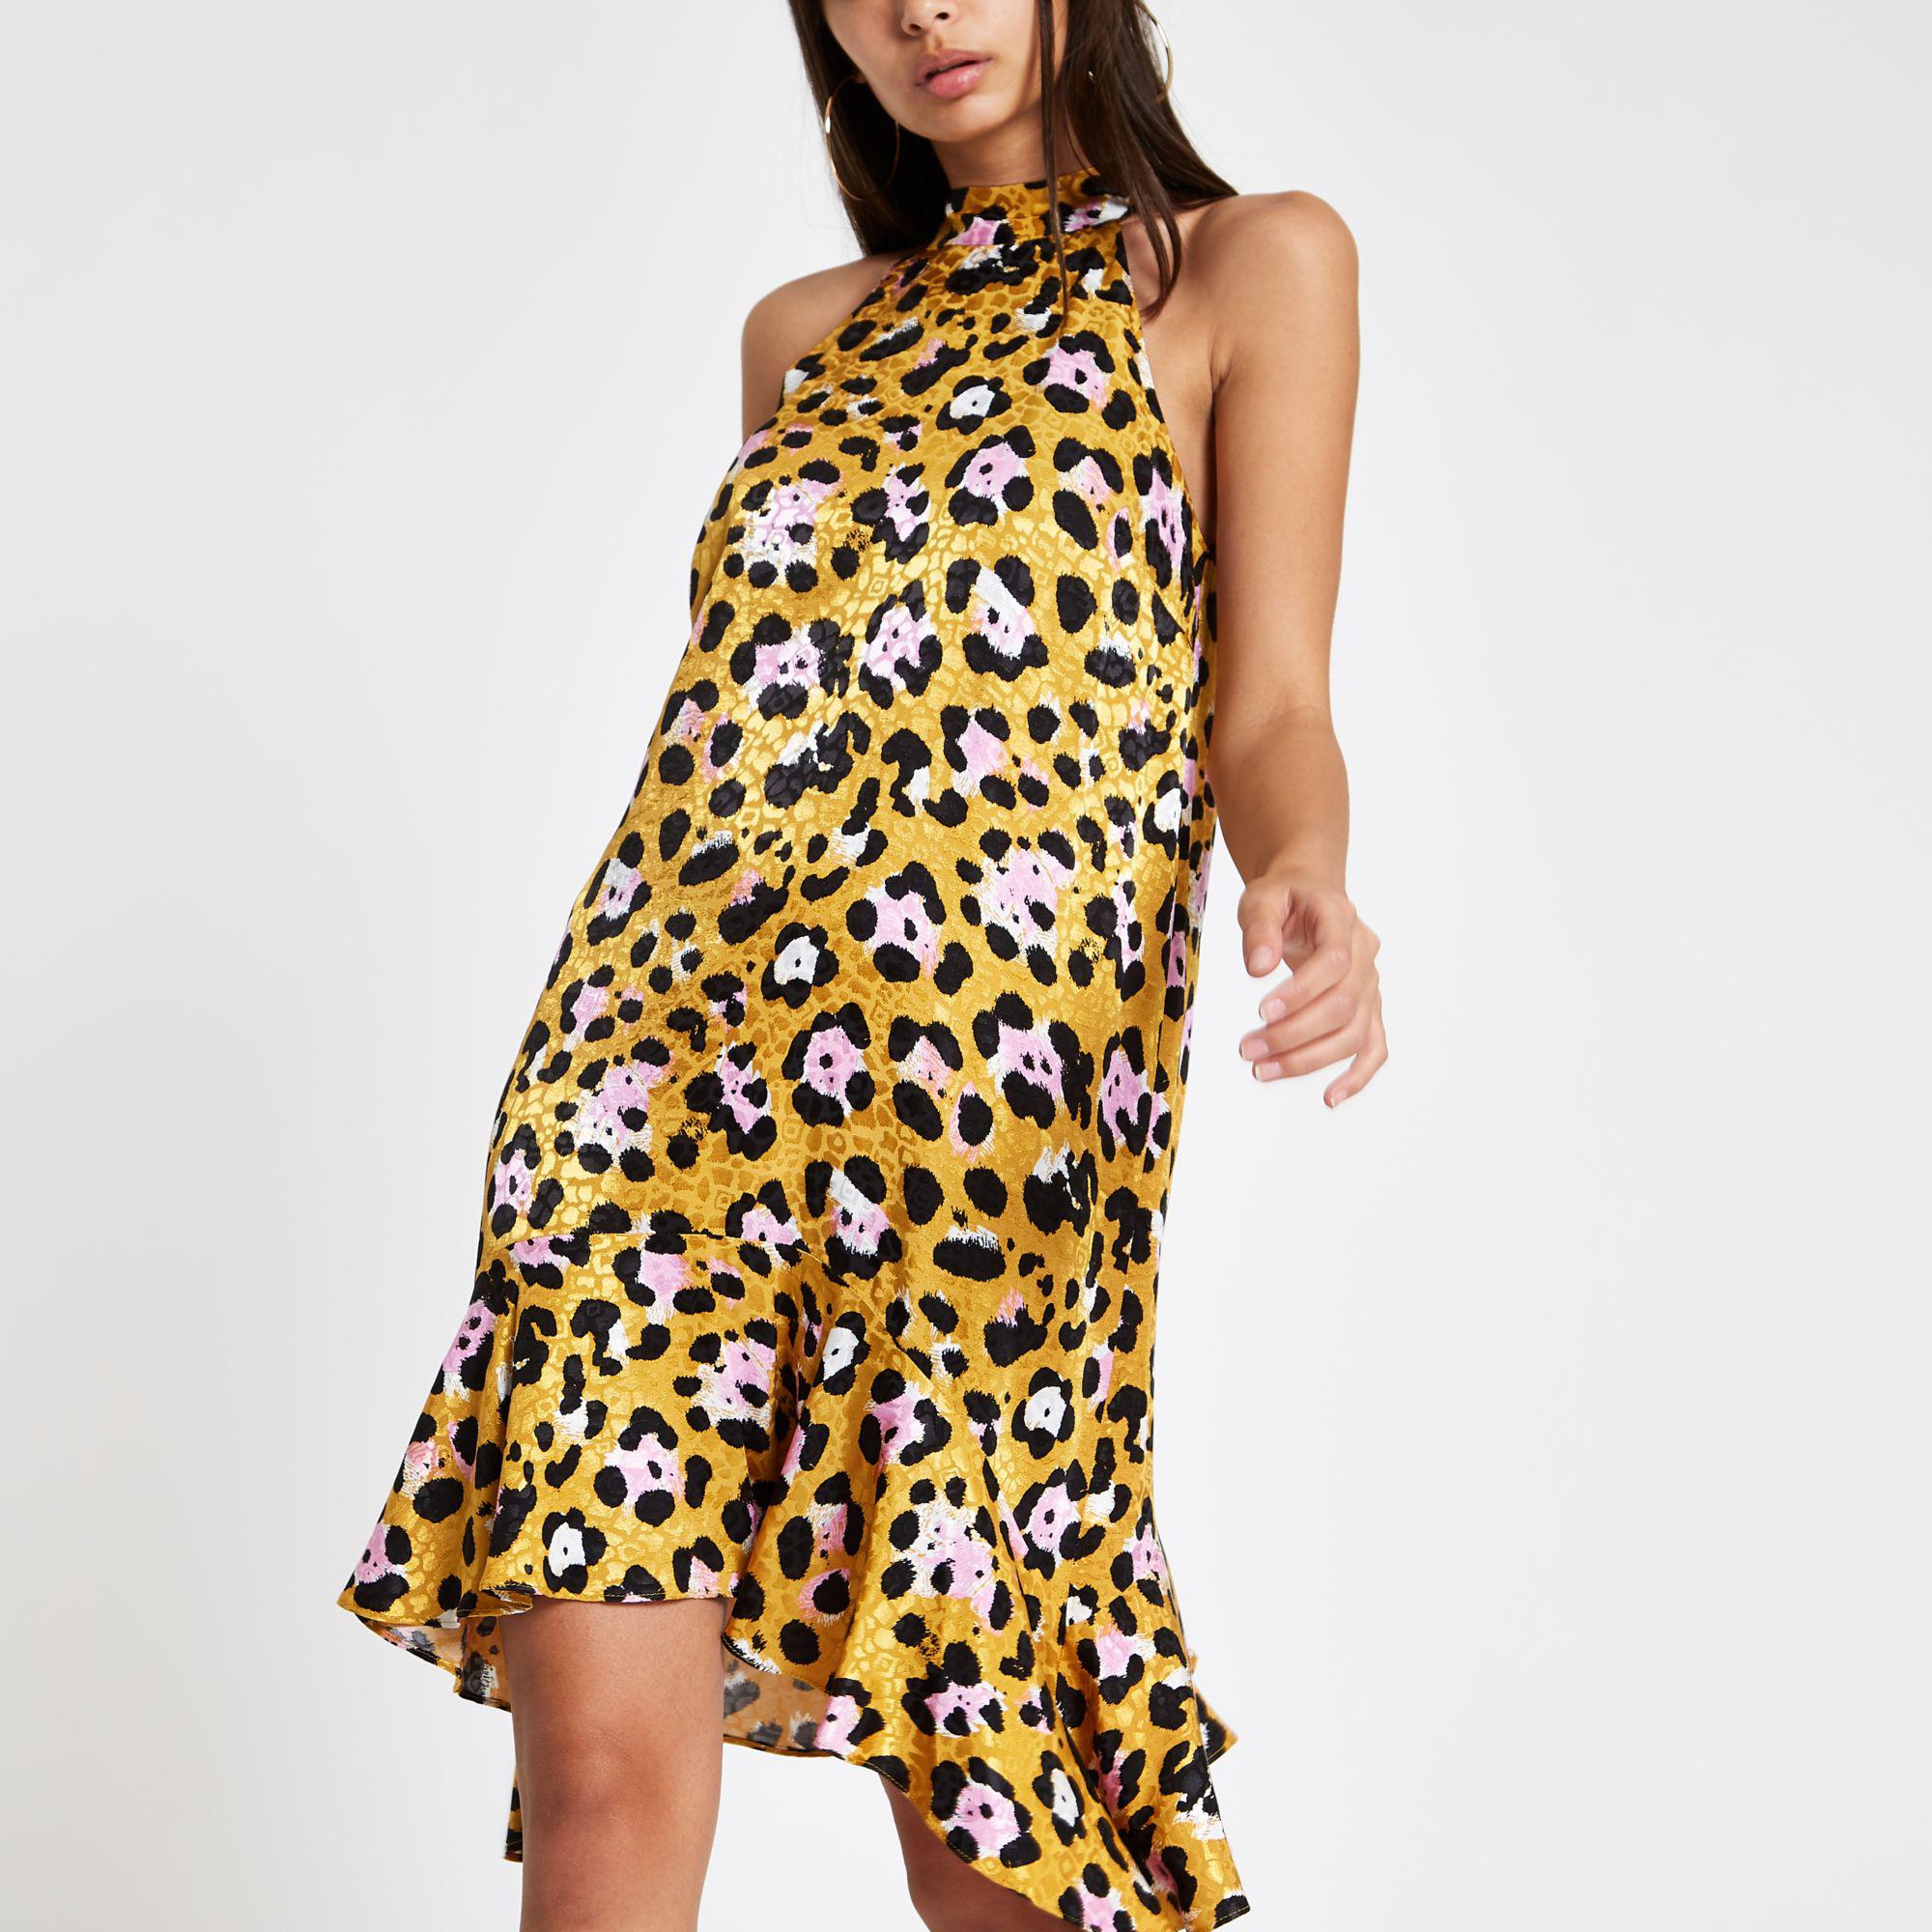 river island yellow leopard dress